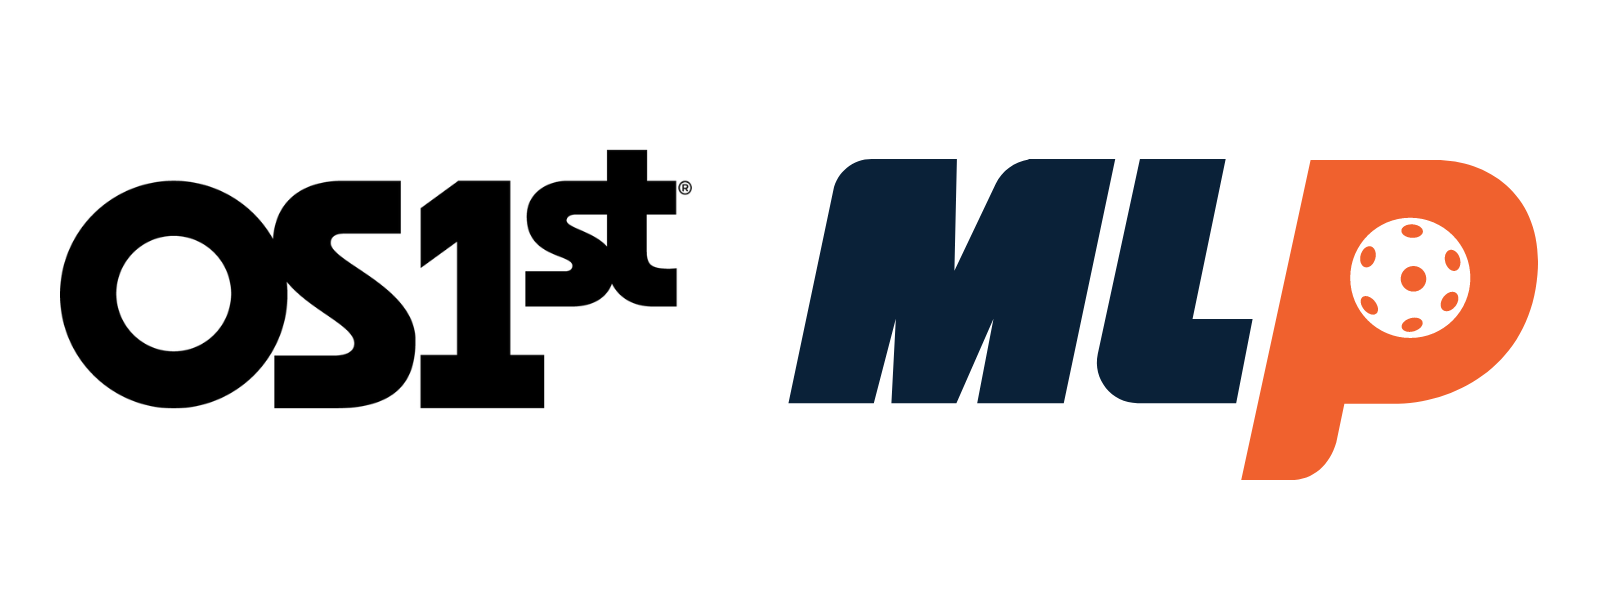 OS1st and Major League Pickleball Logos